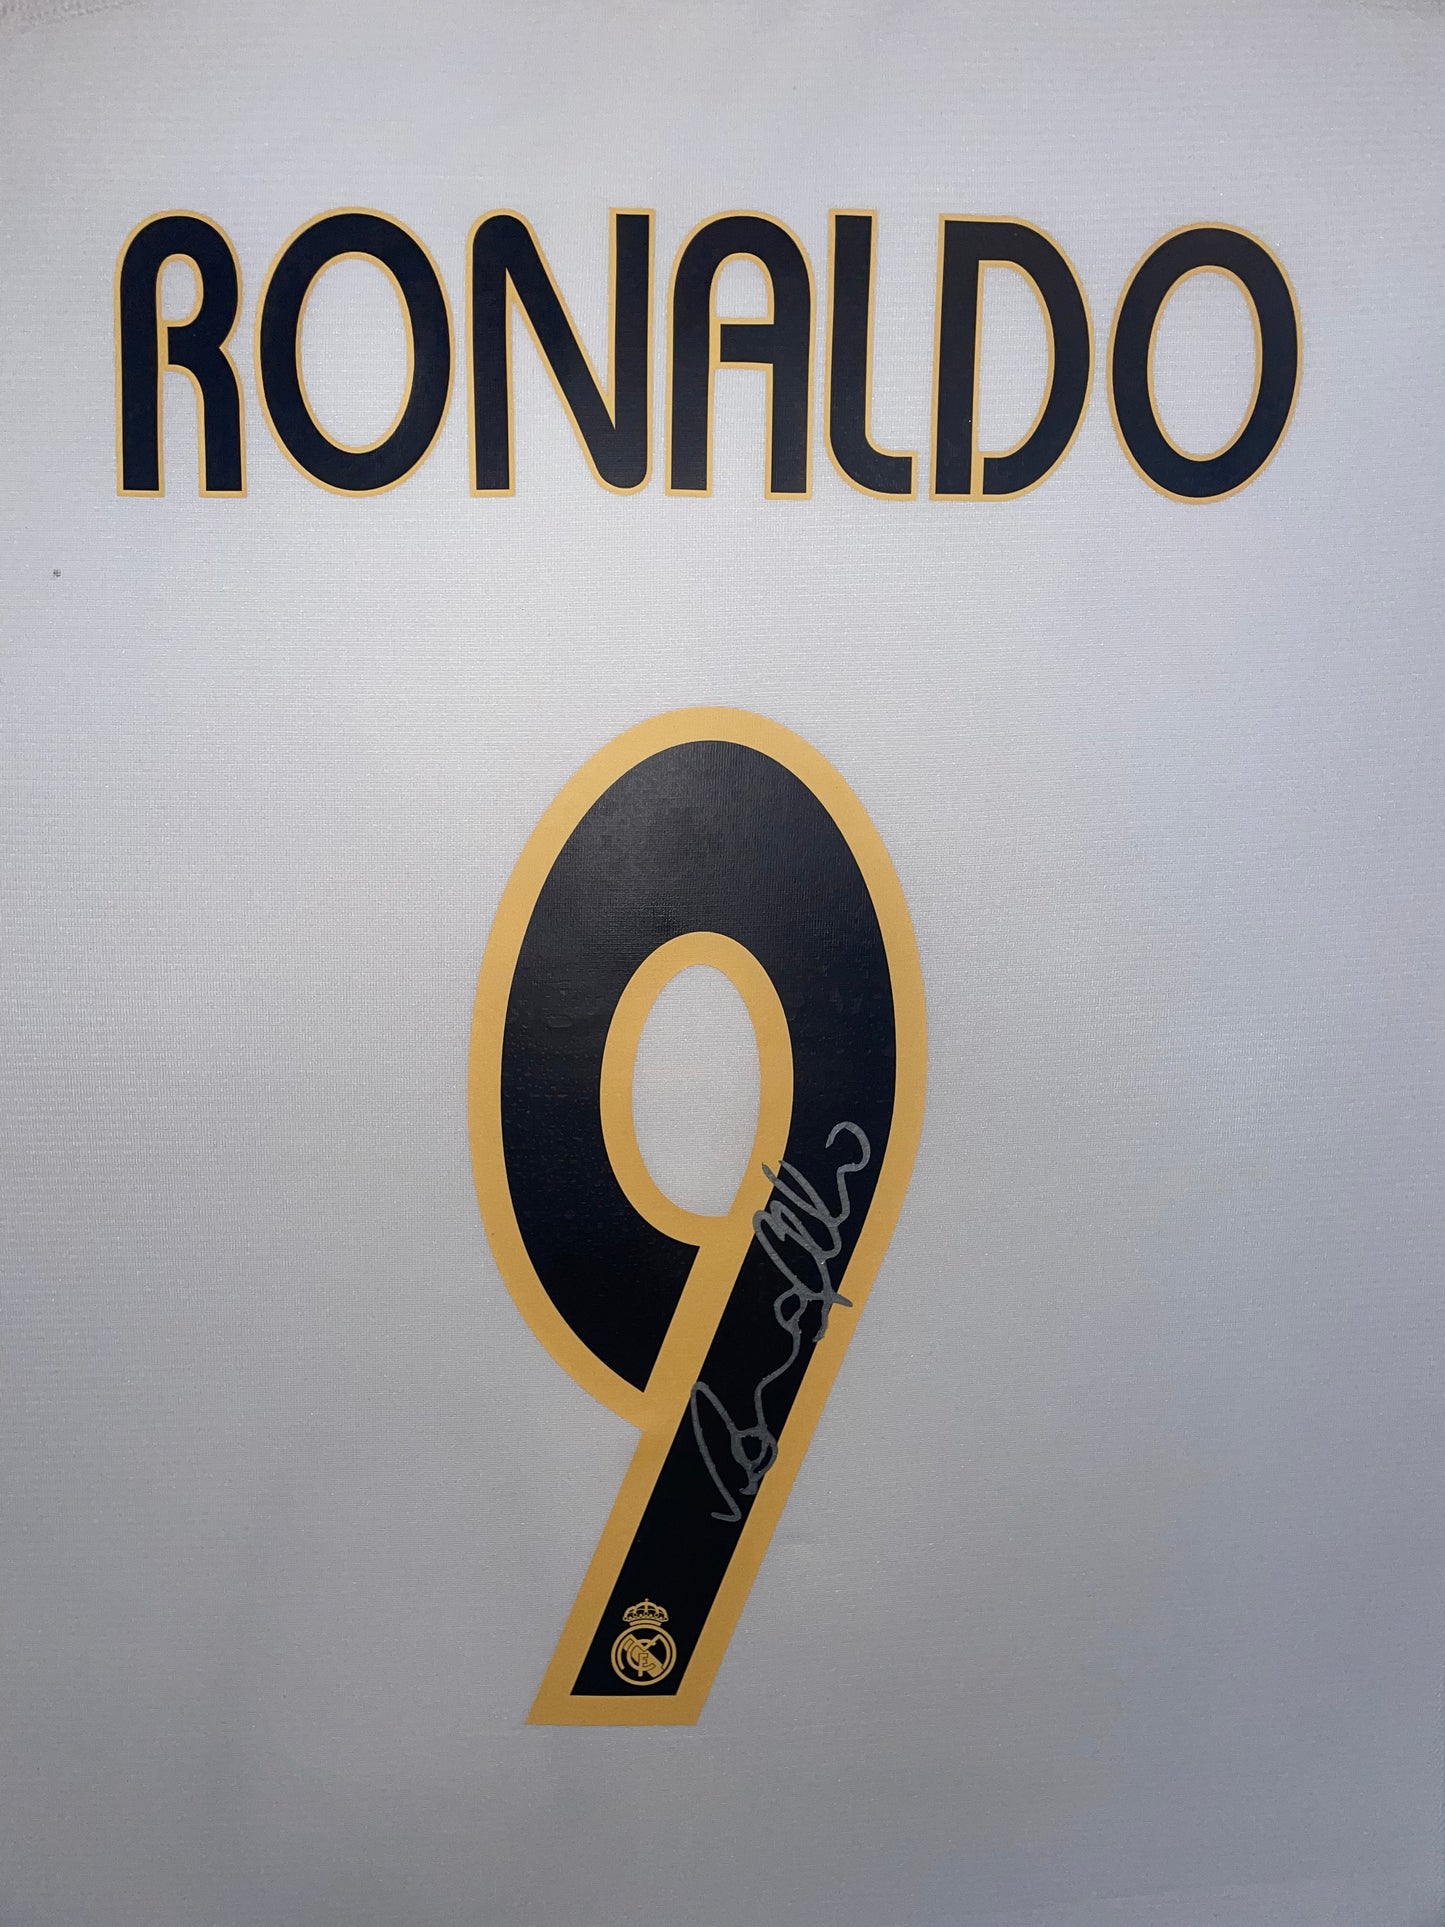 Ronaldo Nazario Signed Real Madrid 2003/04 Framed Home Shirt with COA